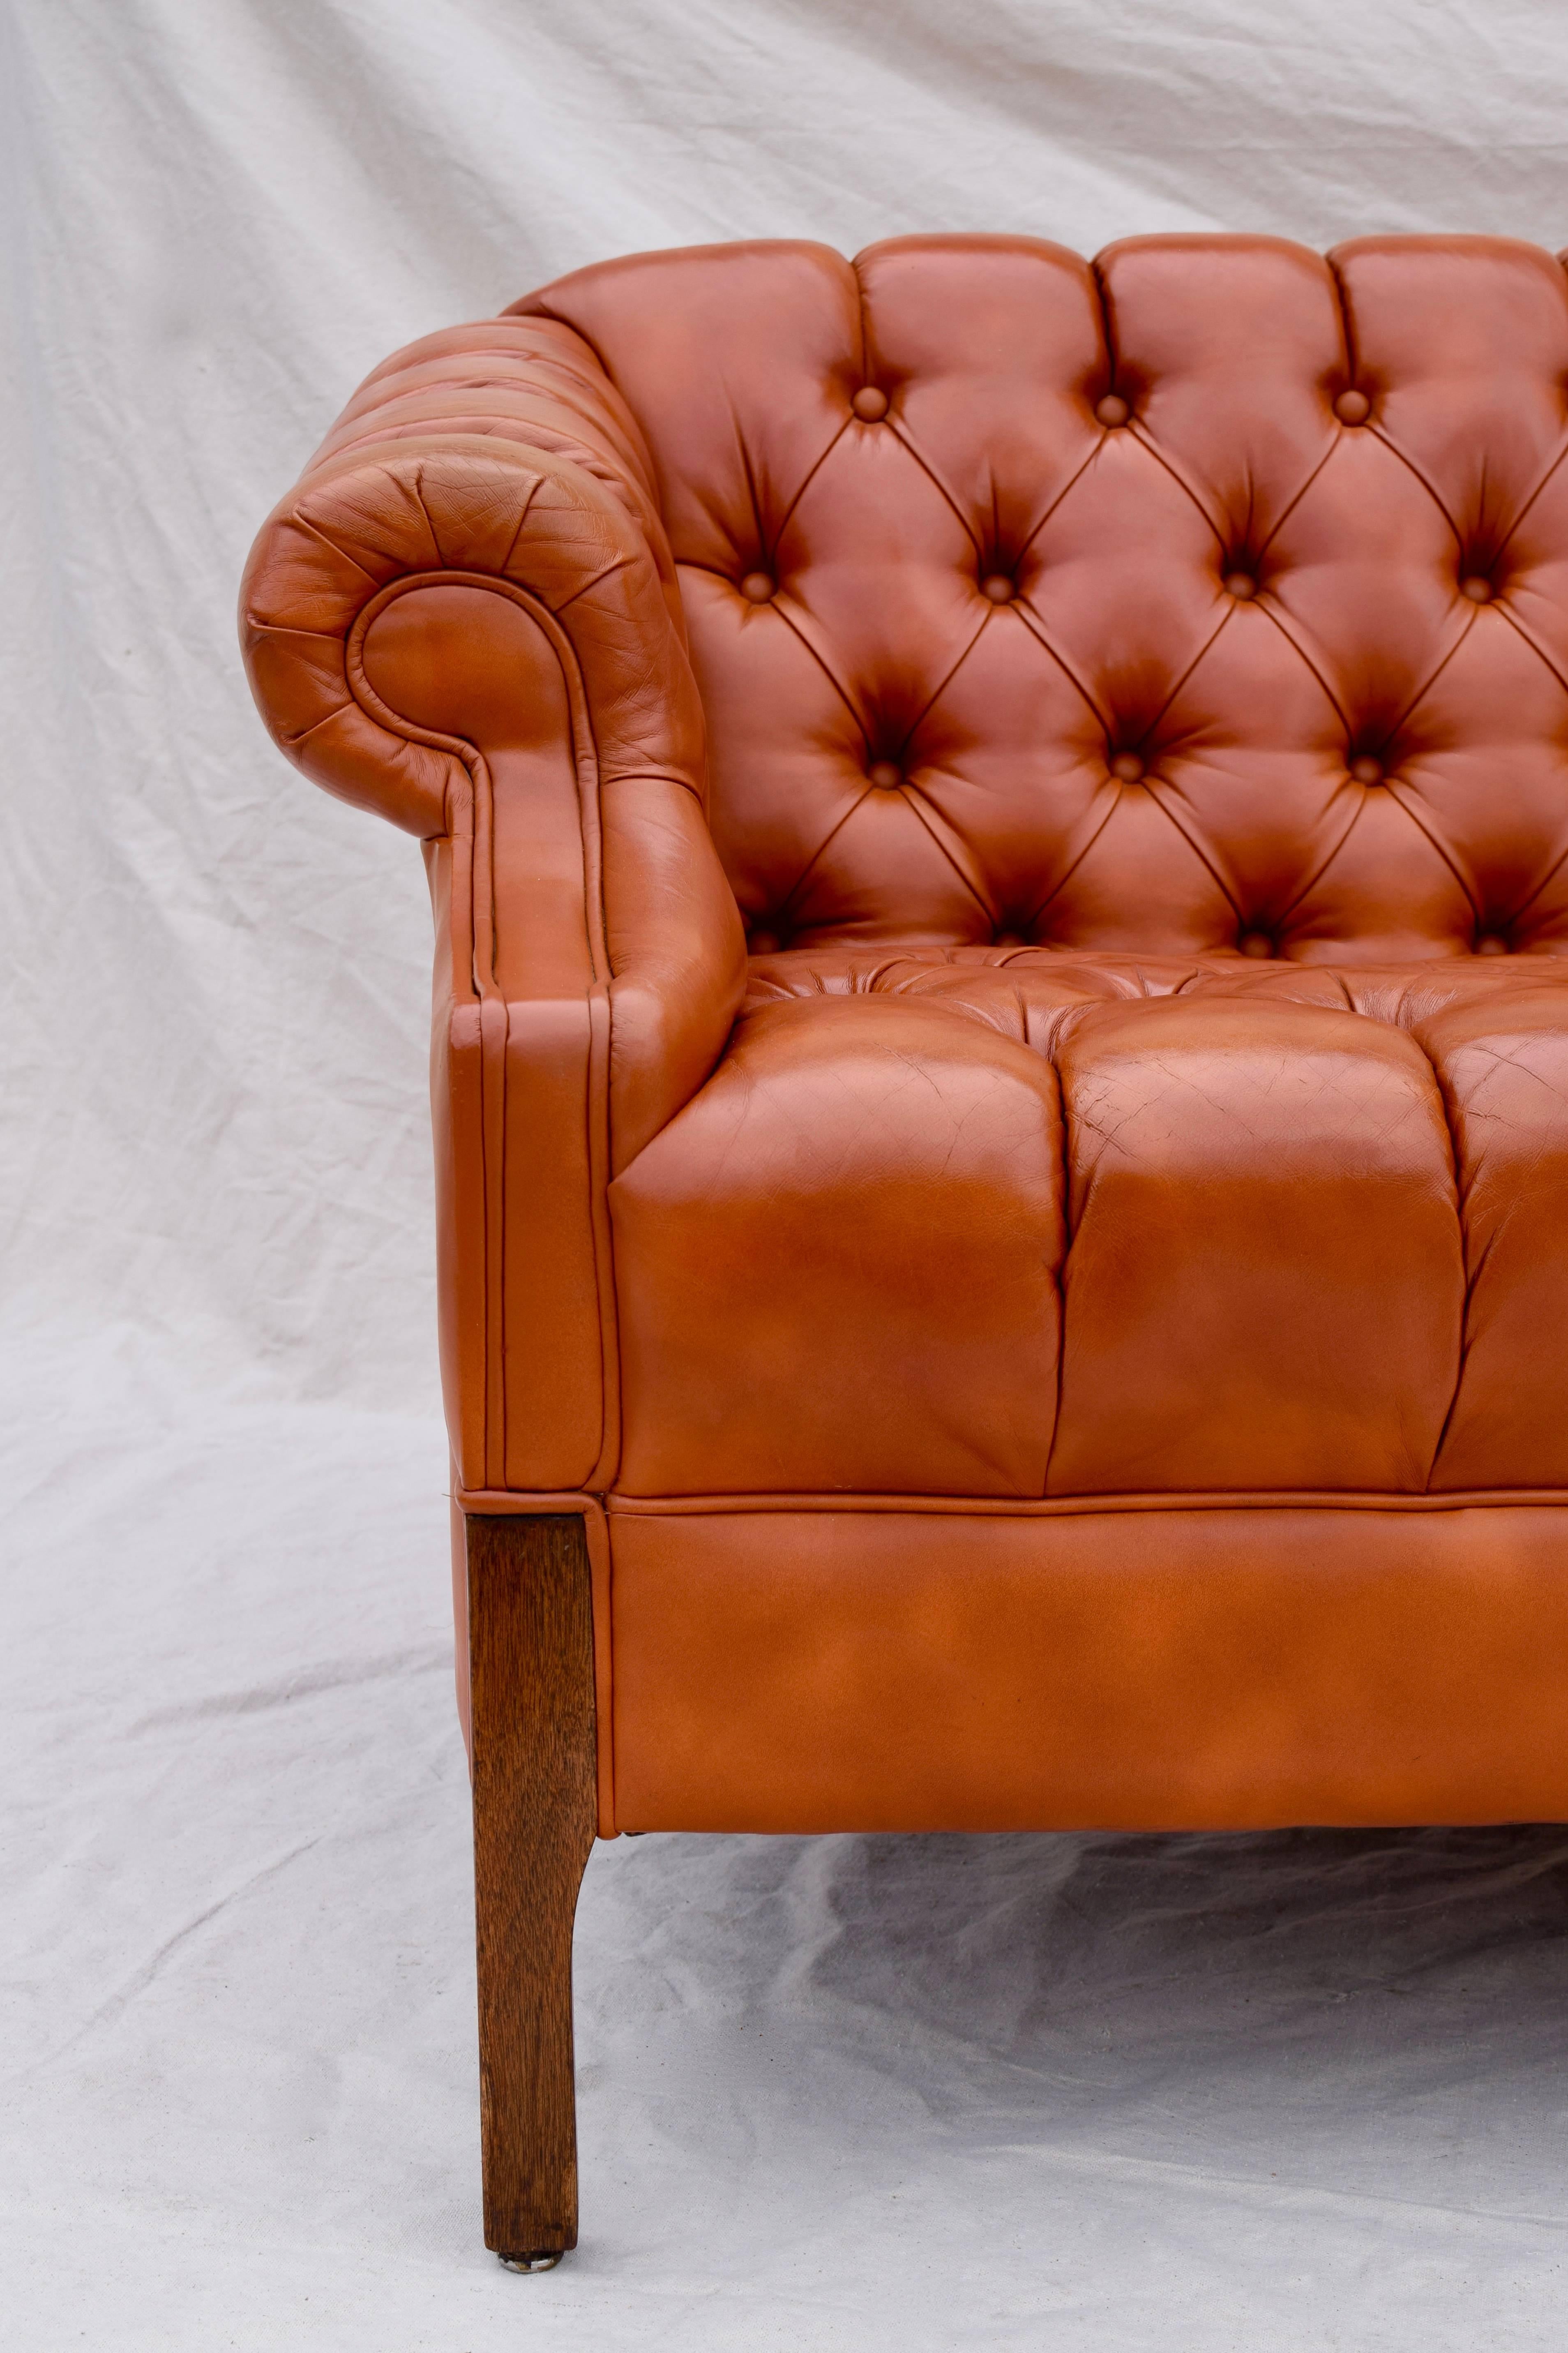 20th Century Swedish Leather Chesterfield Sofa